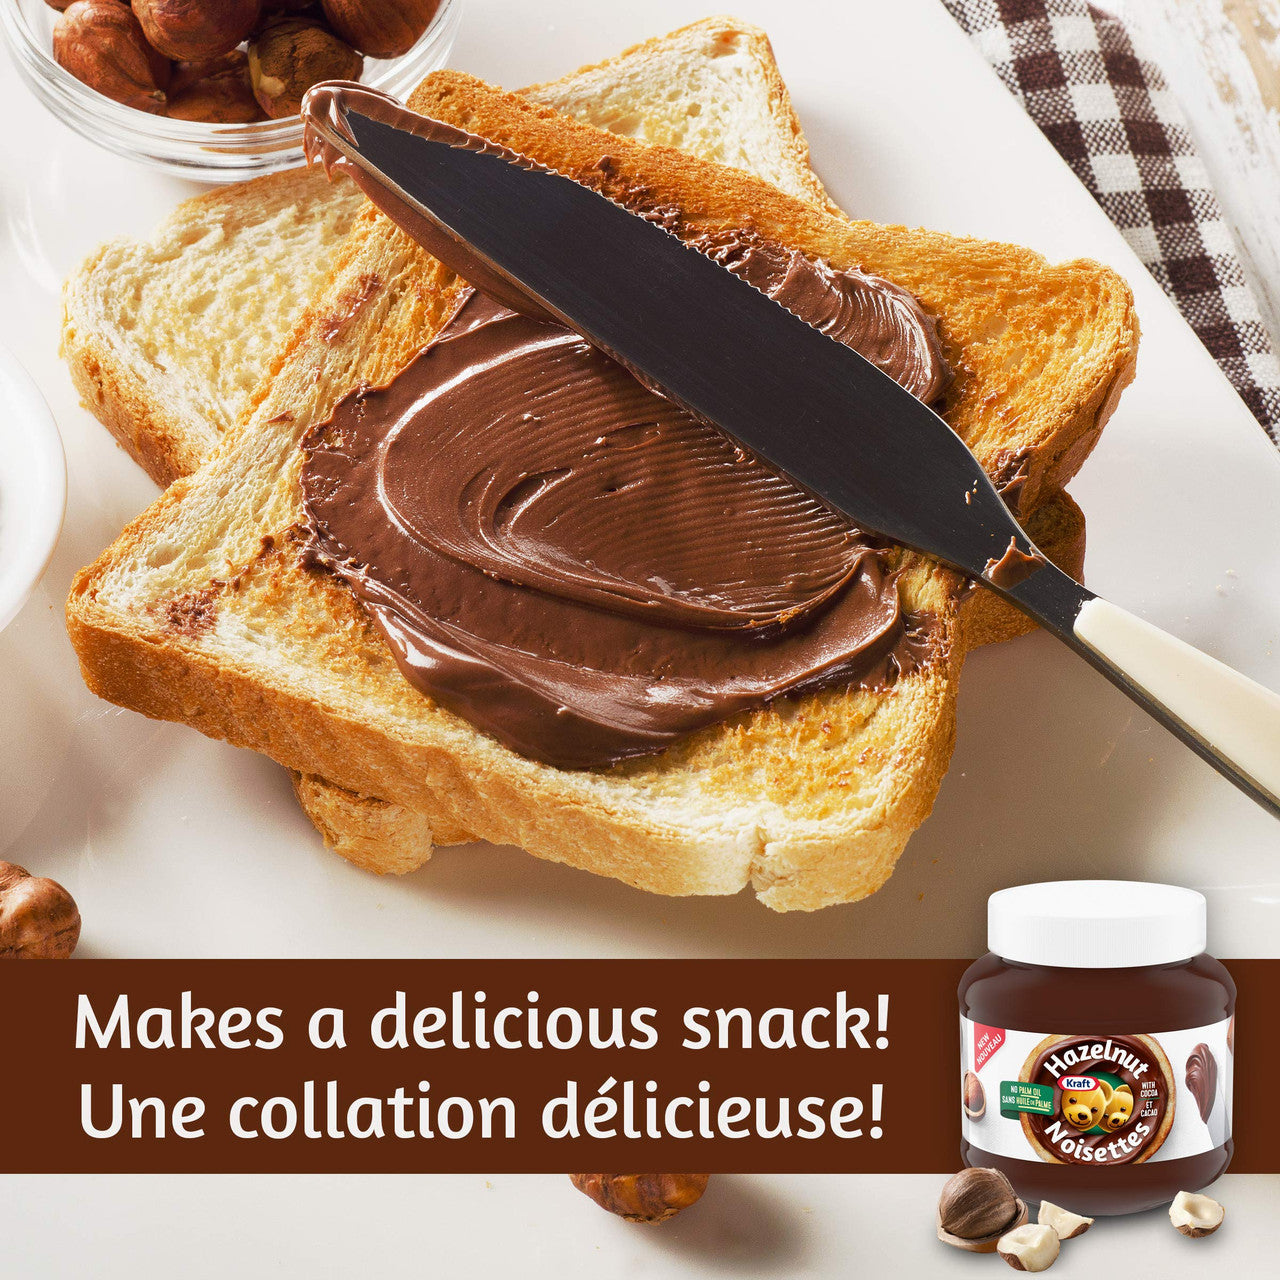  Nutella Hazelnut Chocolate Spread, 1kg/35.3 oz., {Imported  from Canada} : Grocery & Gourmet Food